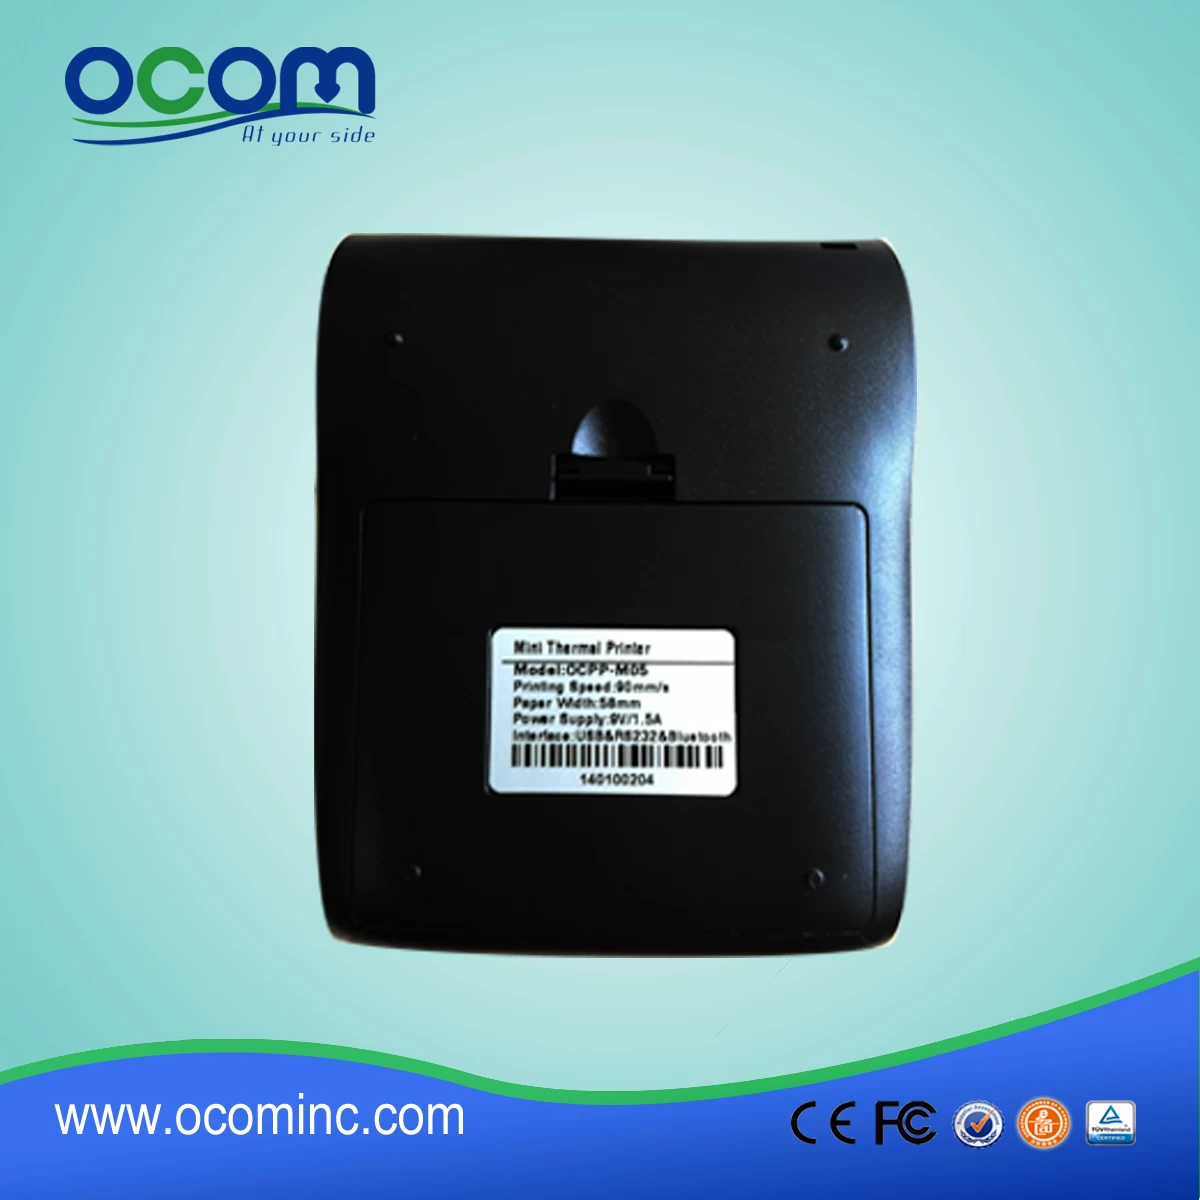 (OCPP-M05) 58mm Mini Portable thermal receipt printer